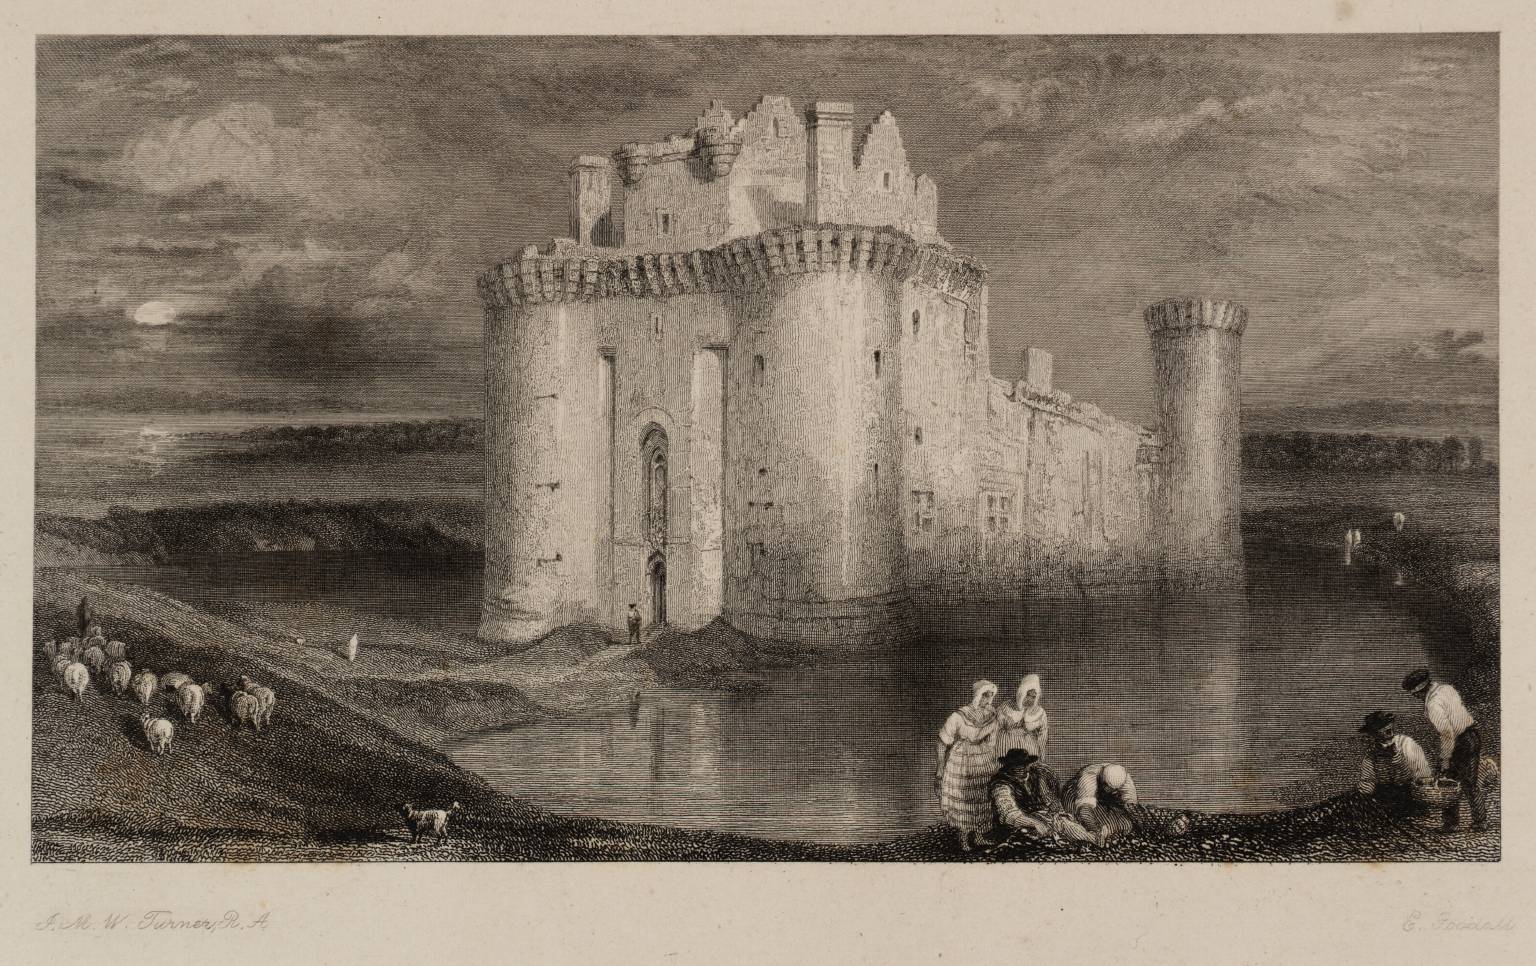 A black and white picture of caerlaverock castle